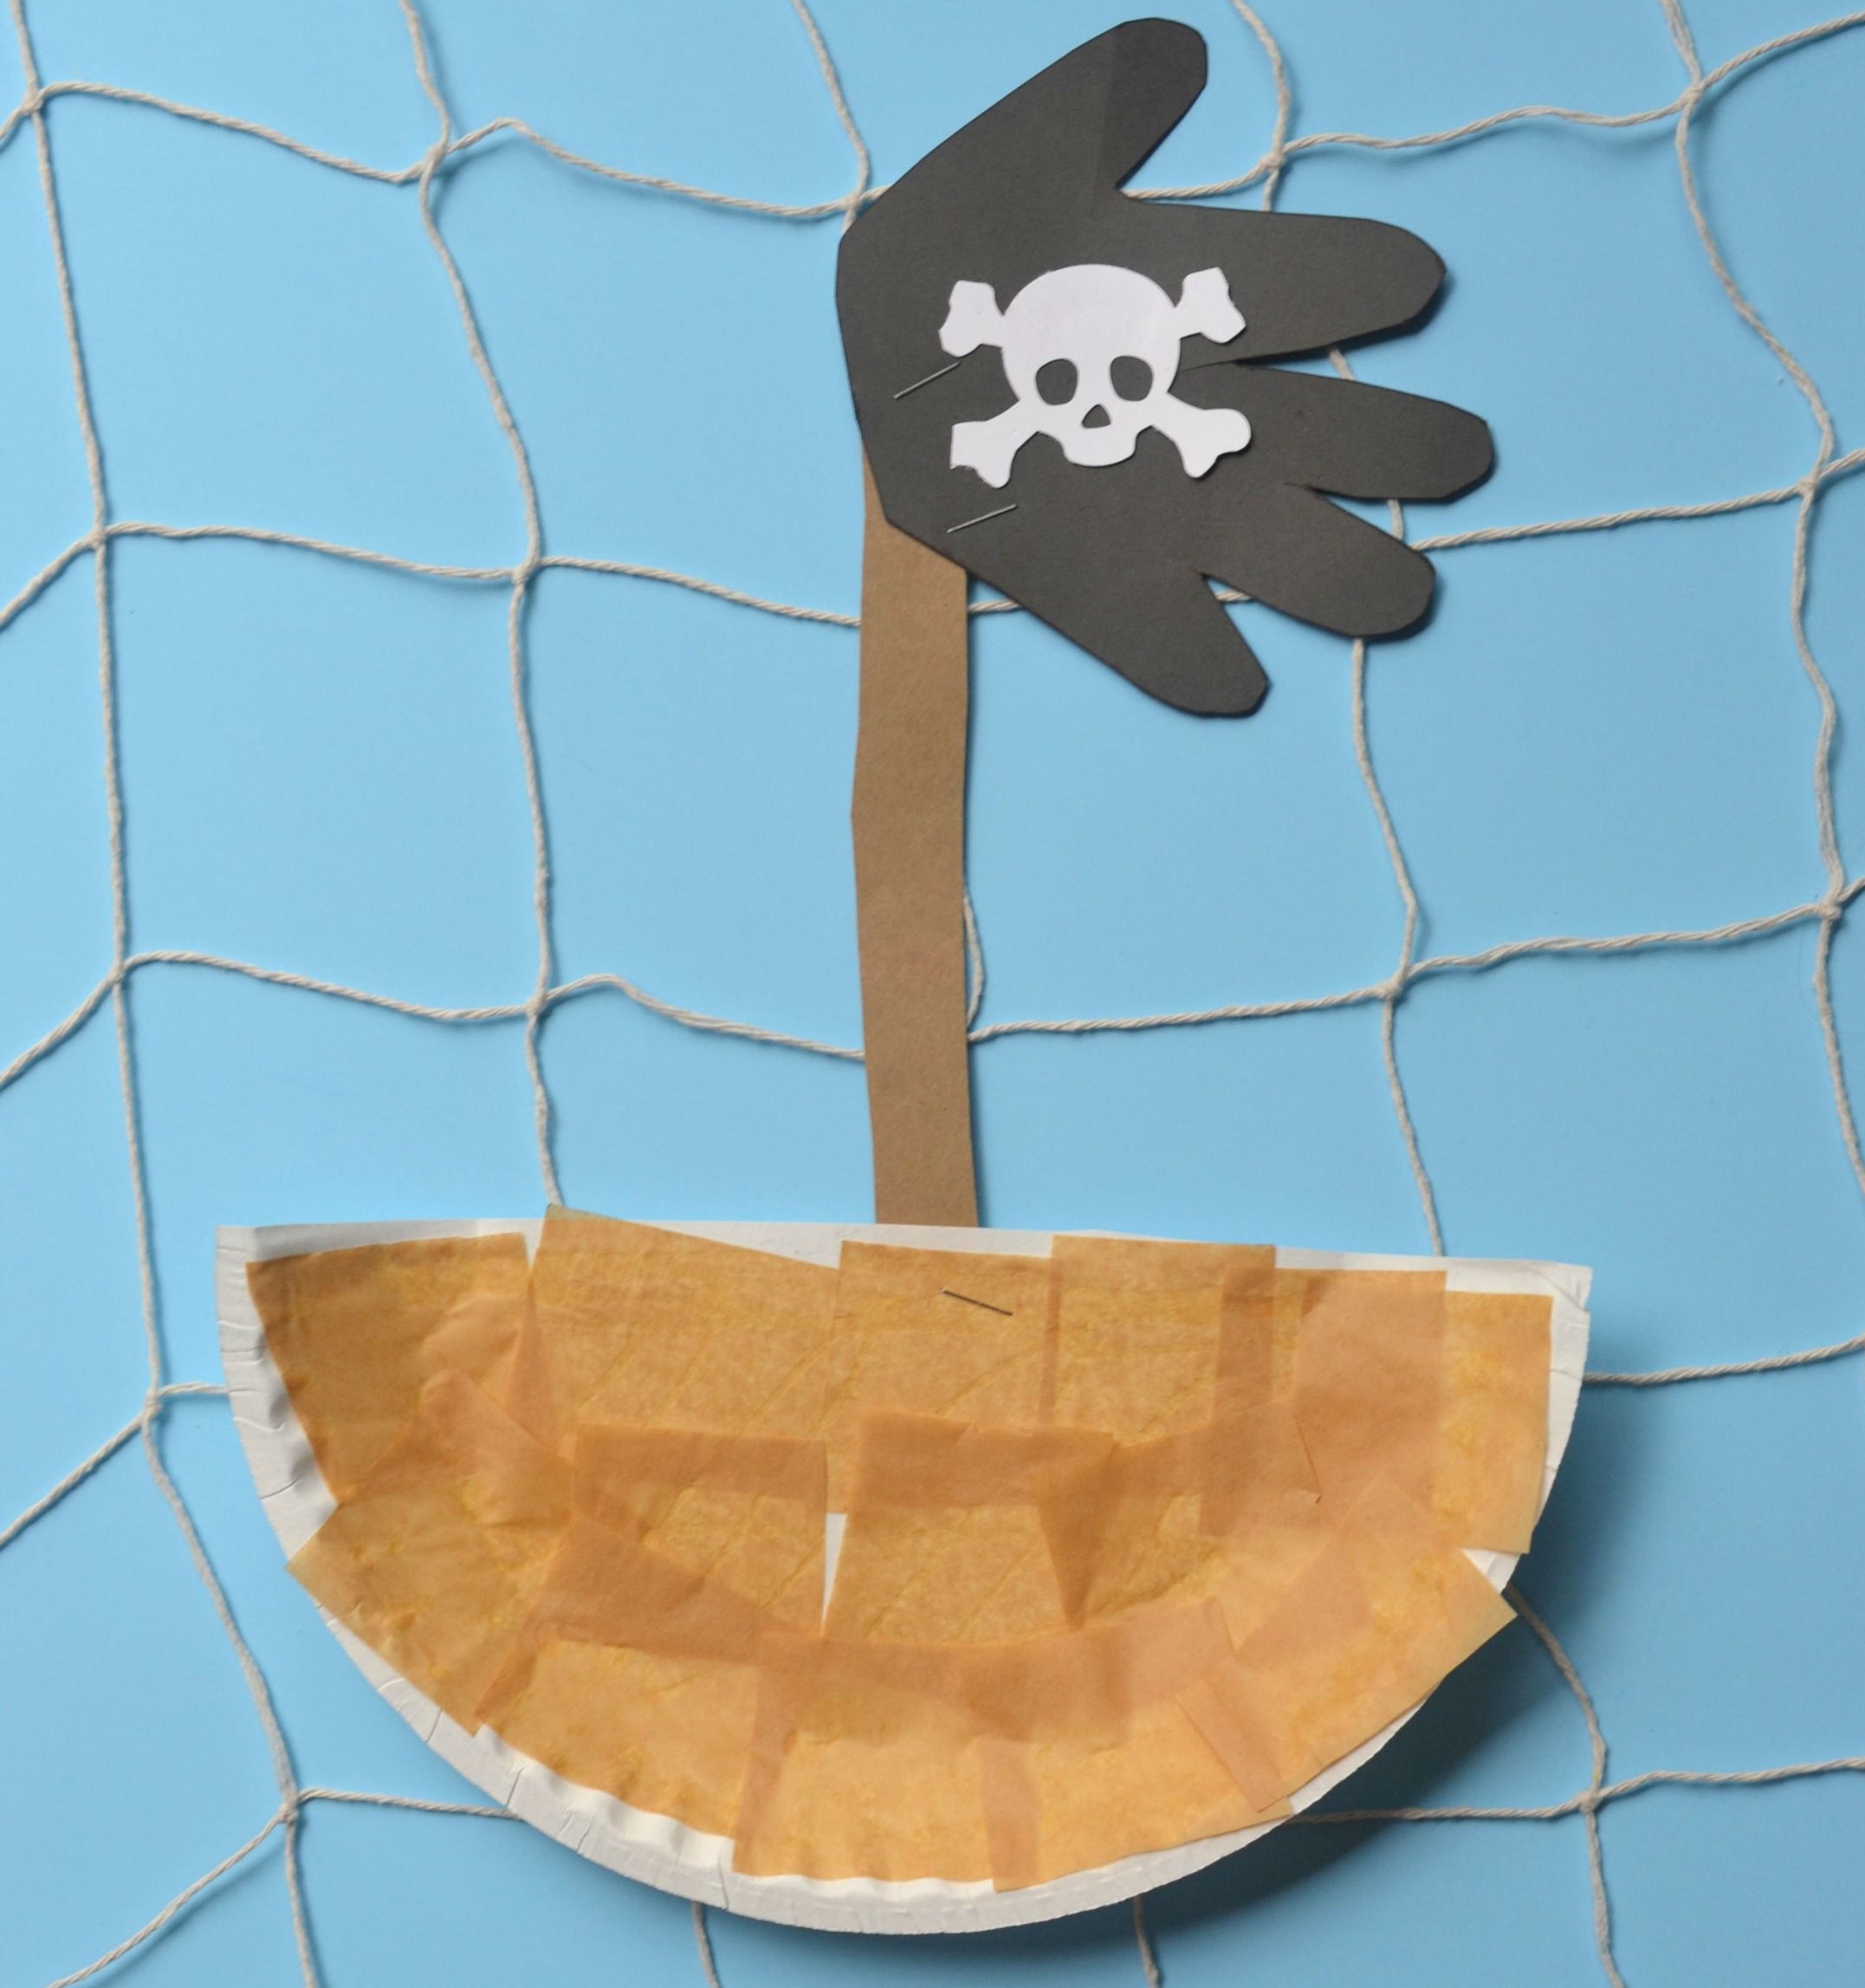 Pirate boat craft for children